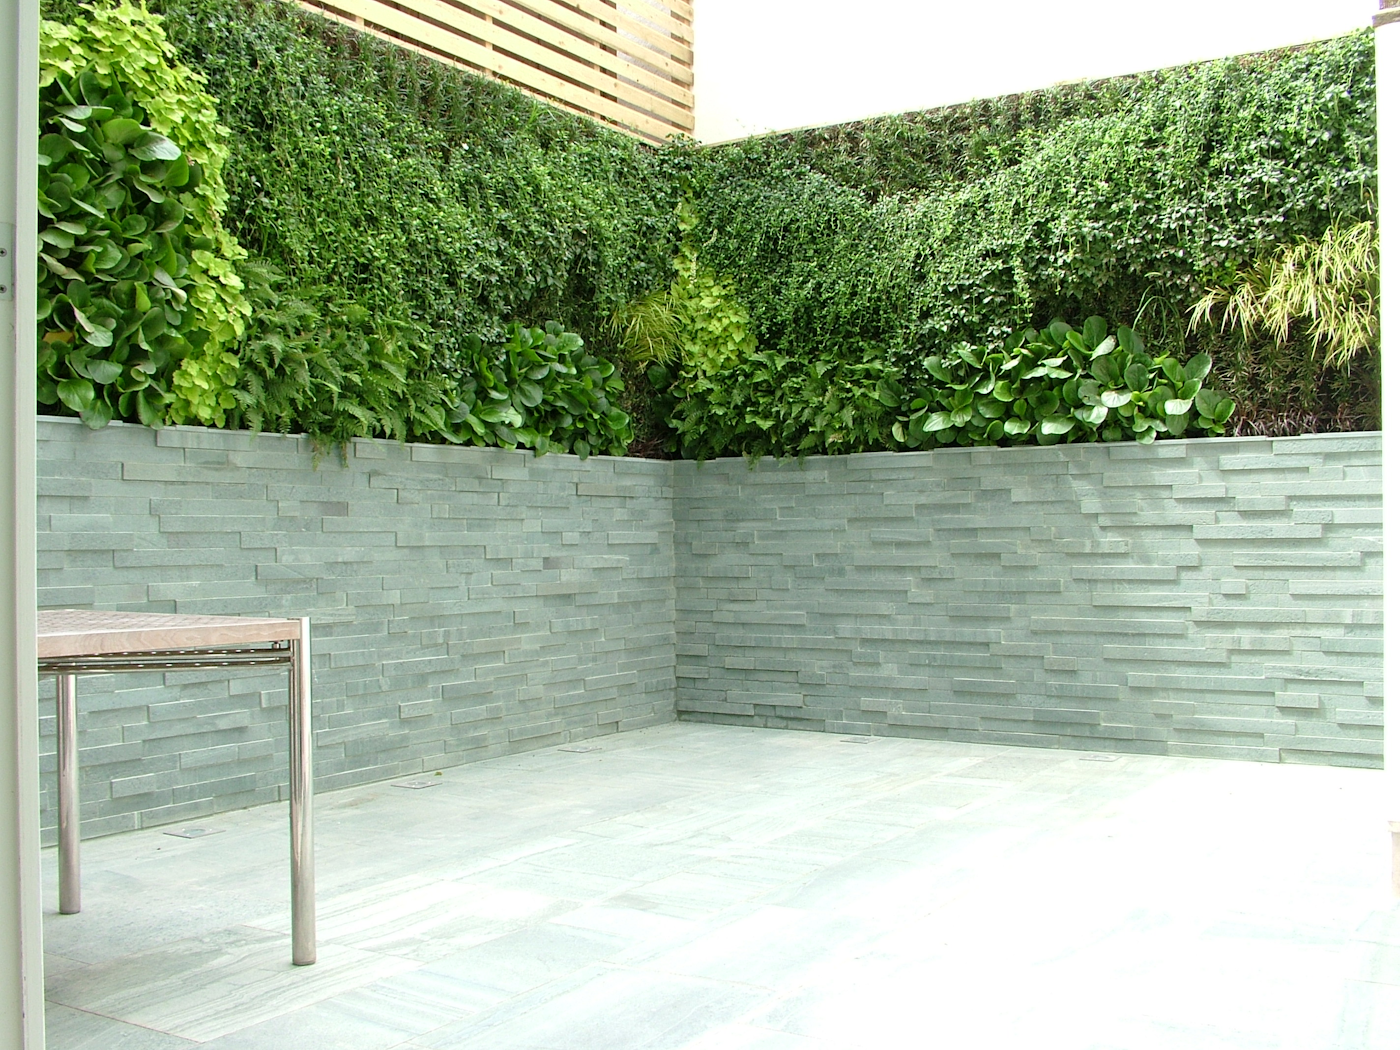 Living Wall In Patio Garden Area